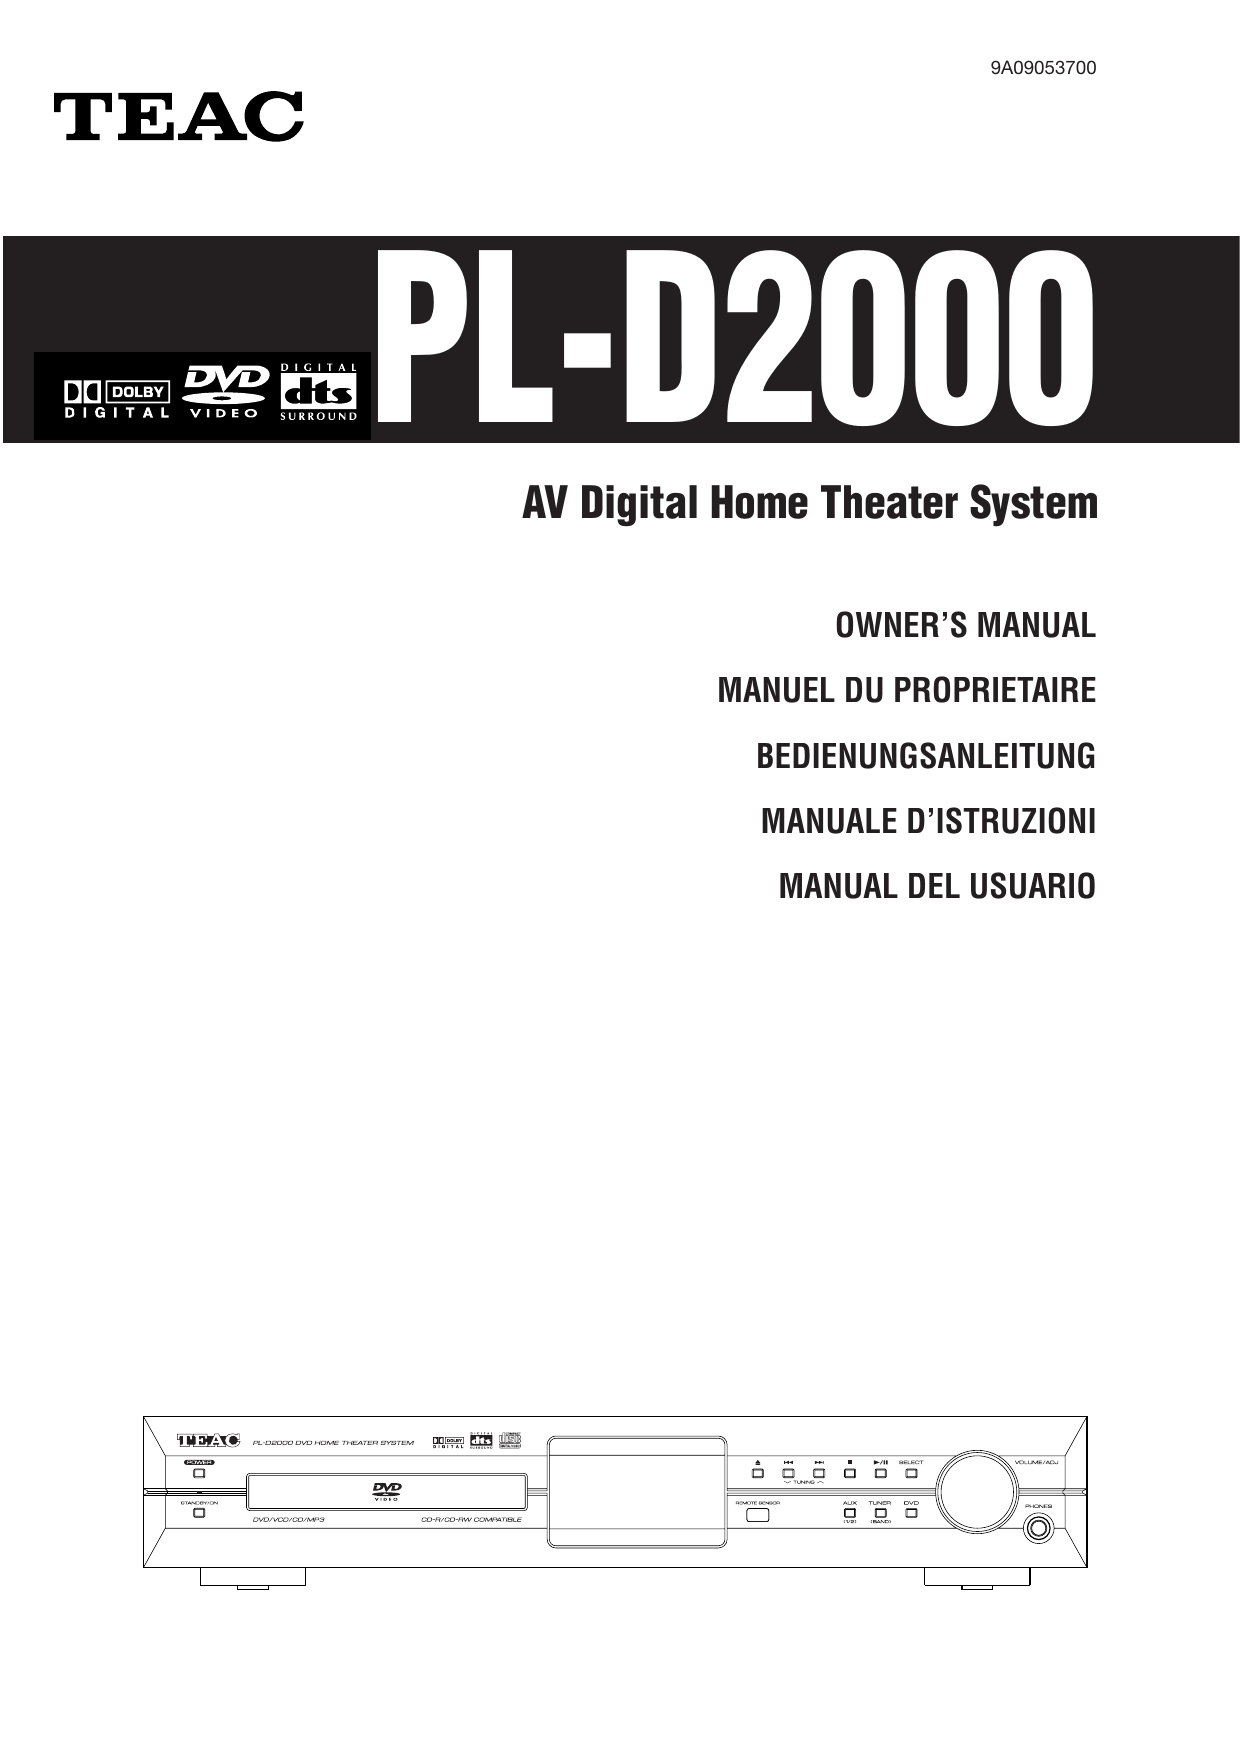 TEAC PL-D2000 Owner's Manual